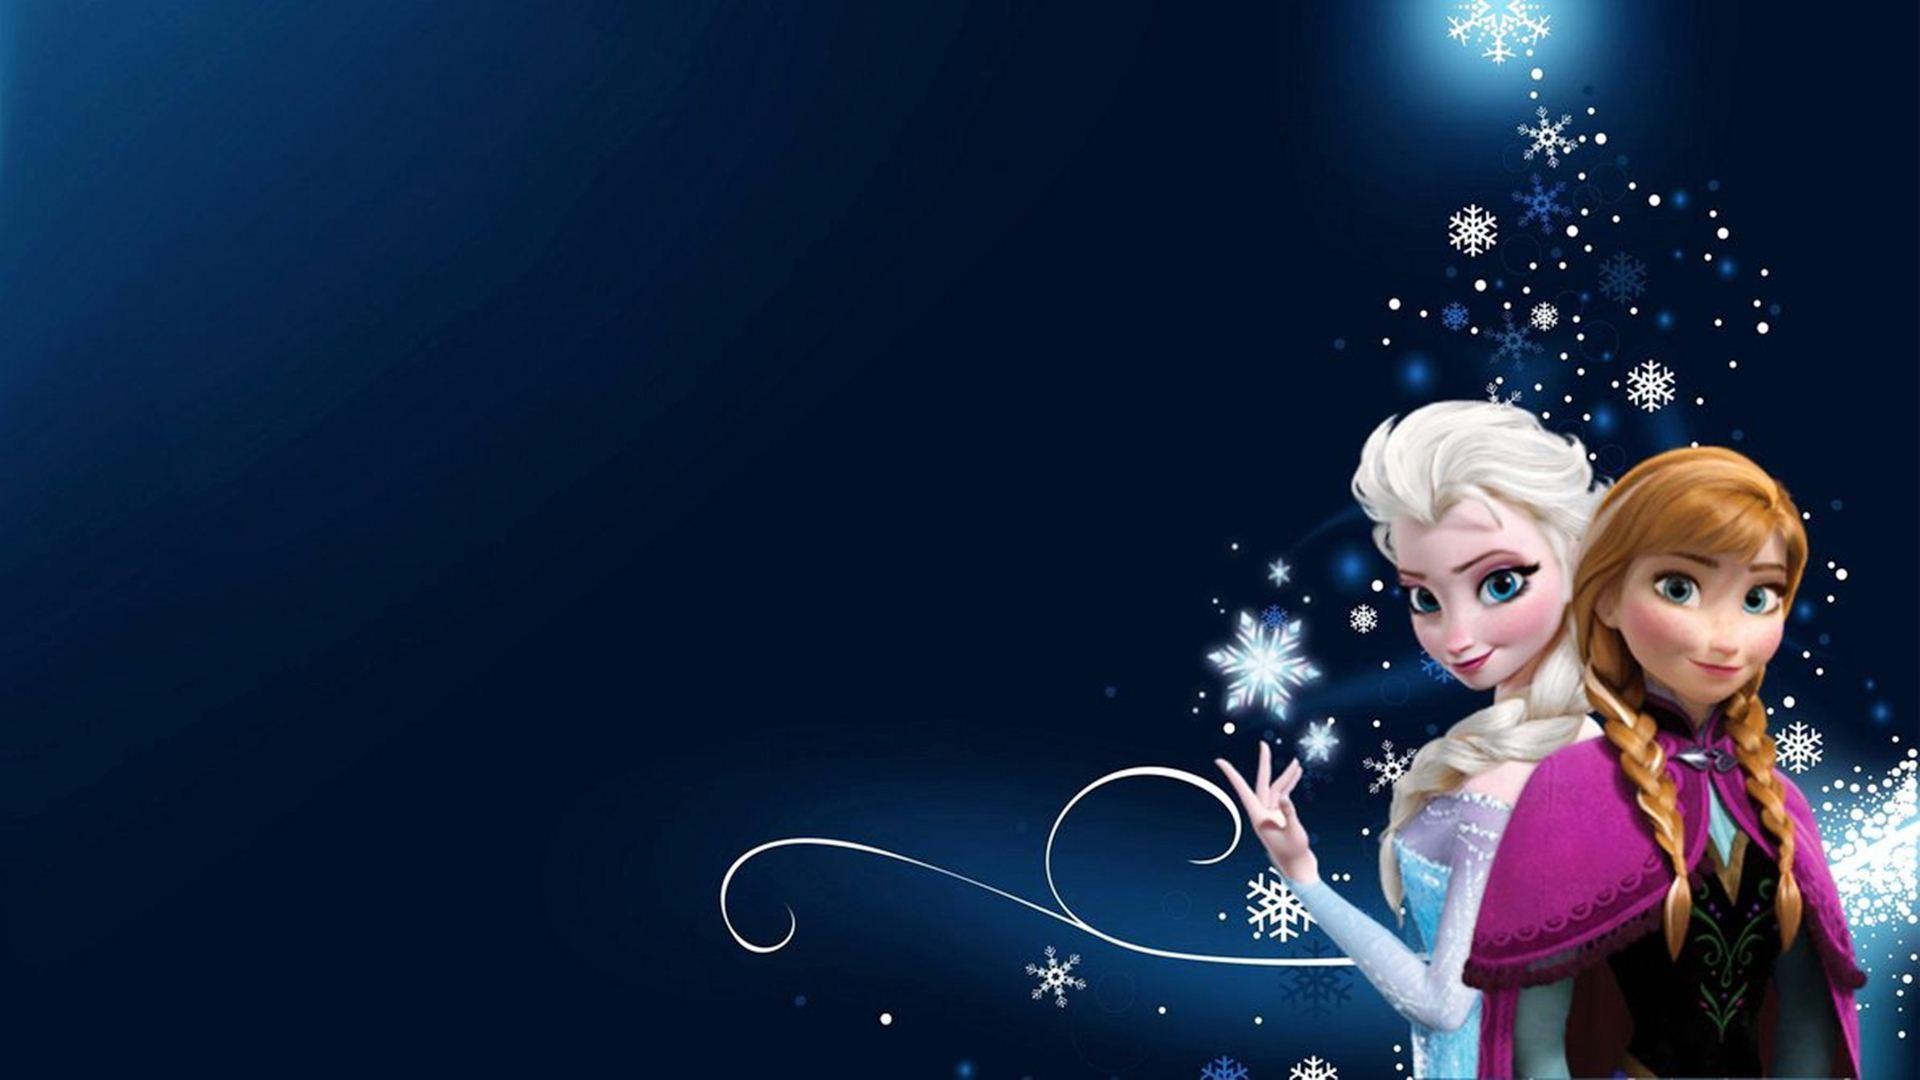 Elsa, Anna and Olaf from Disney's Frozen. Description